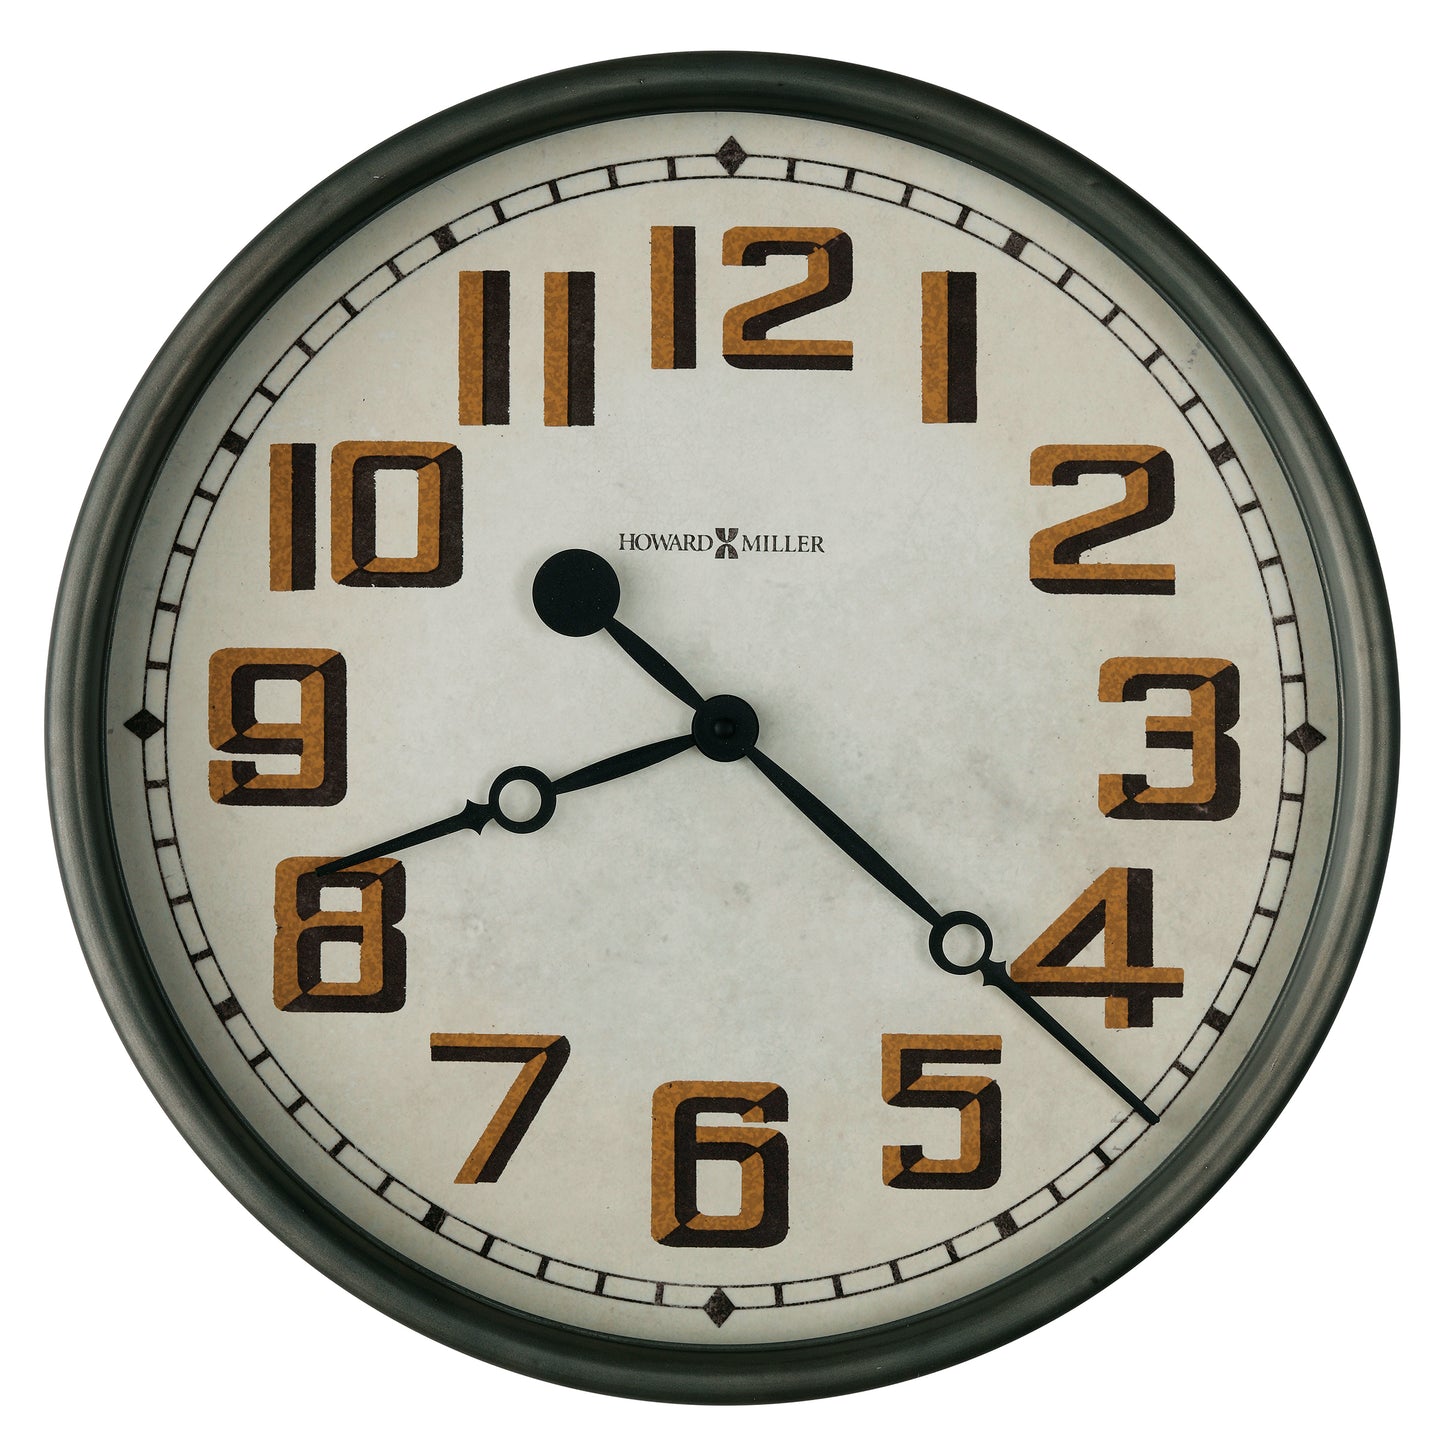 HOWARD MILLER HEWITT WALL CLOCK 625715 - Grandfather Clocks